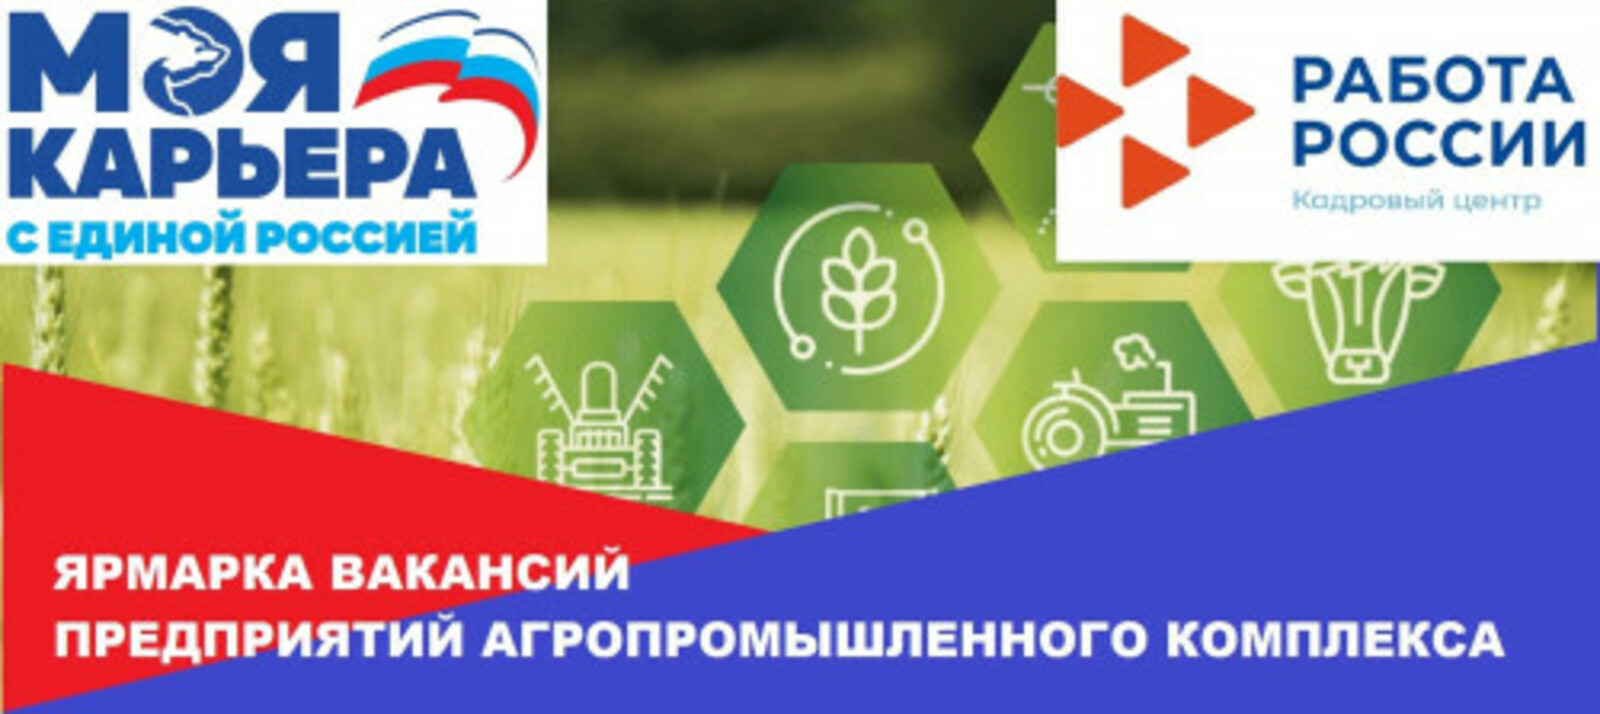 В столице Башкирии 22 марта состоится ярмарка вакансий на предприятиях АПК республики